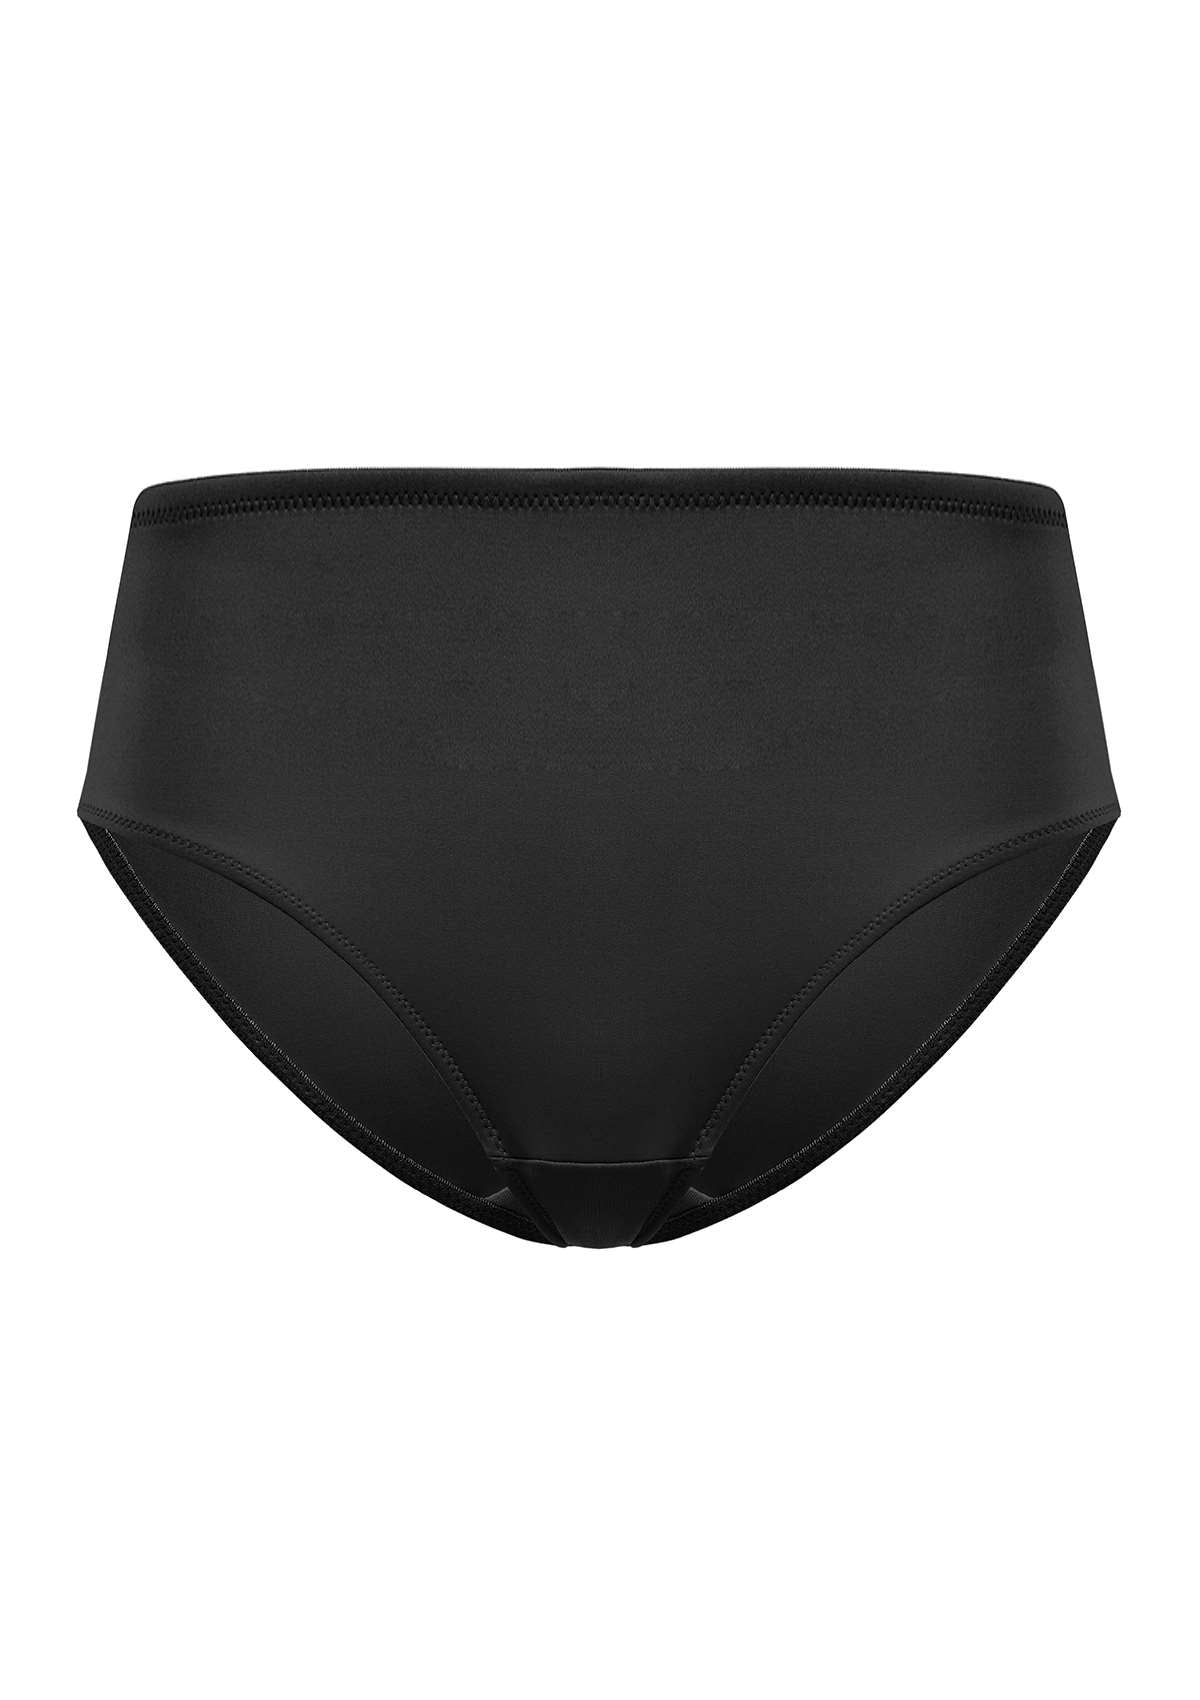 HSIA Patricia Smooth Soft Stretch Comfort High-Rise Brief Underwear - L / Beige